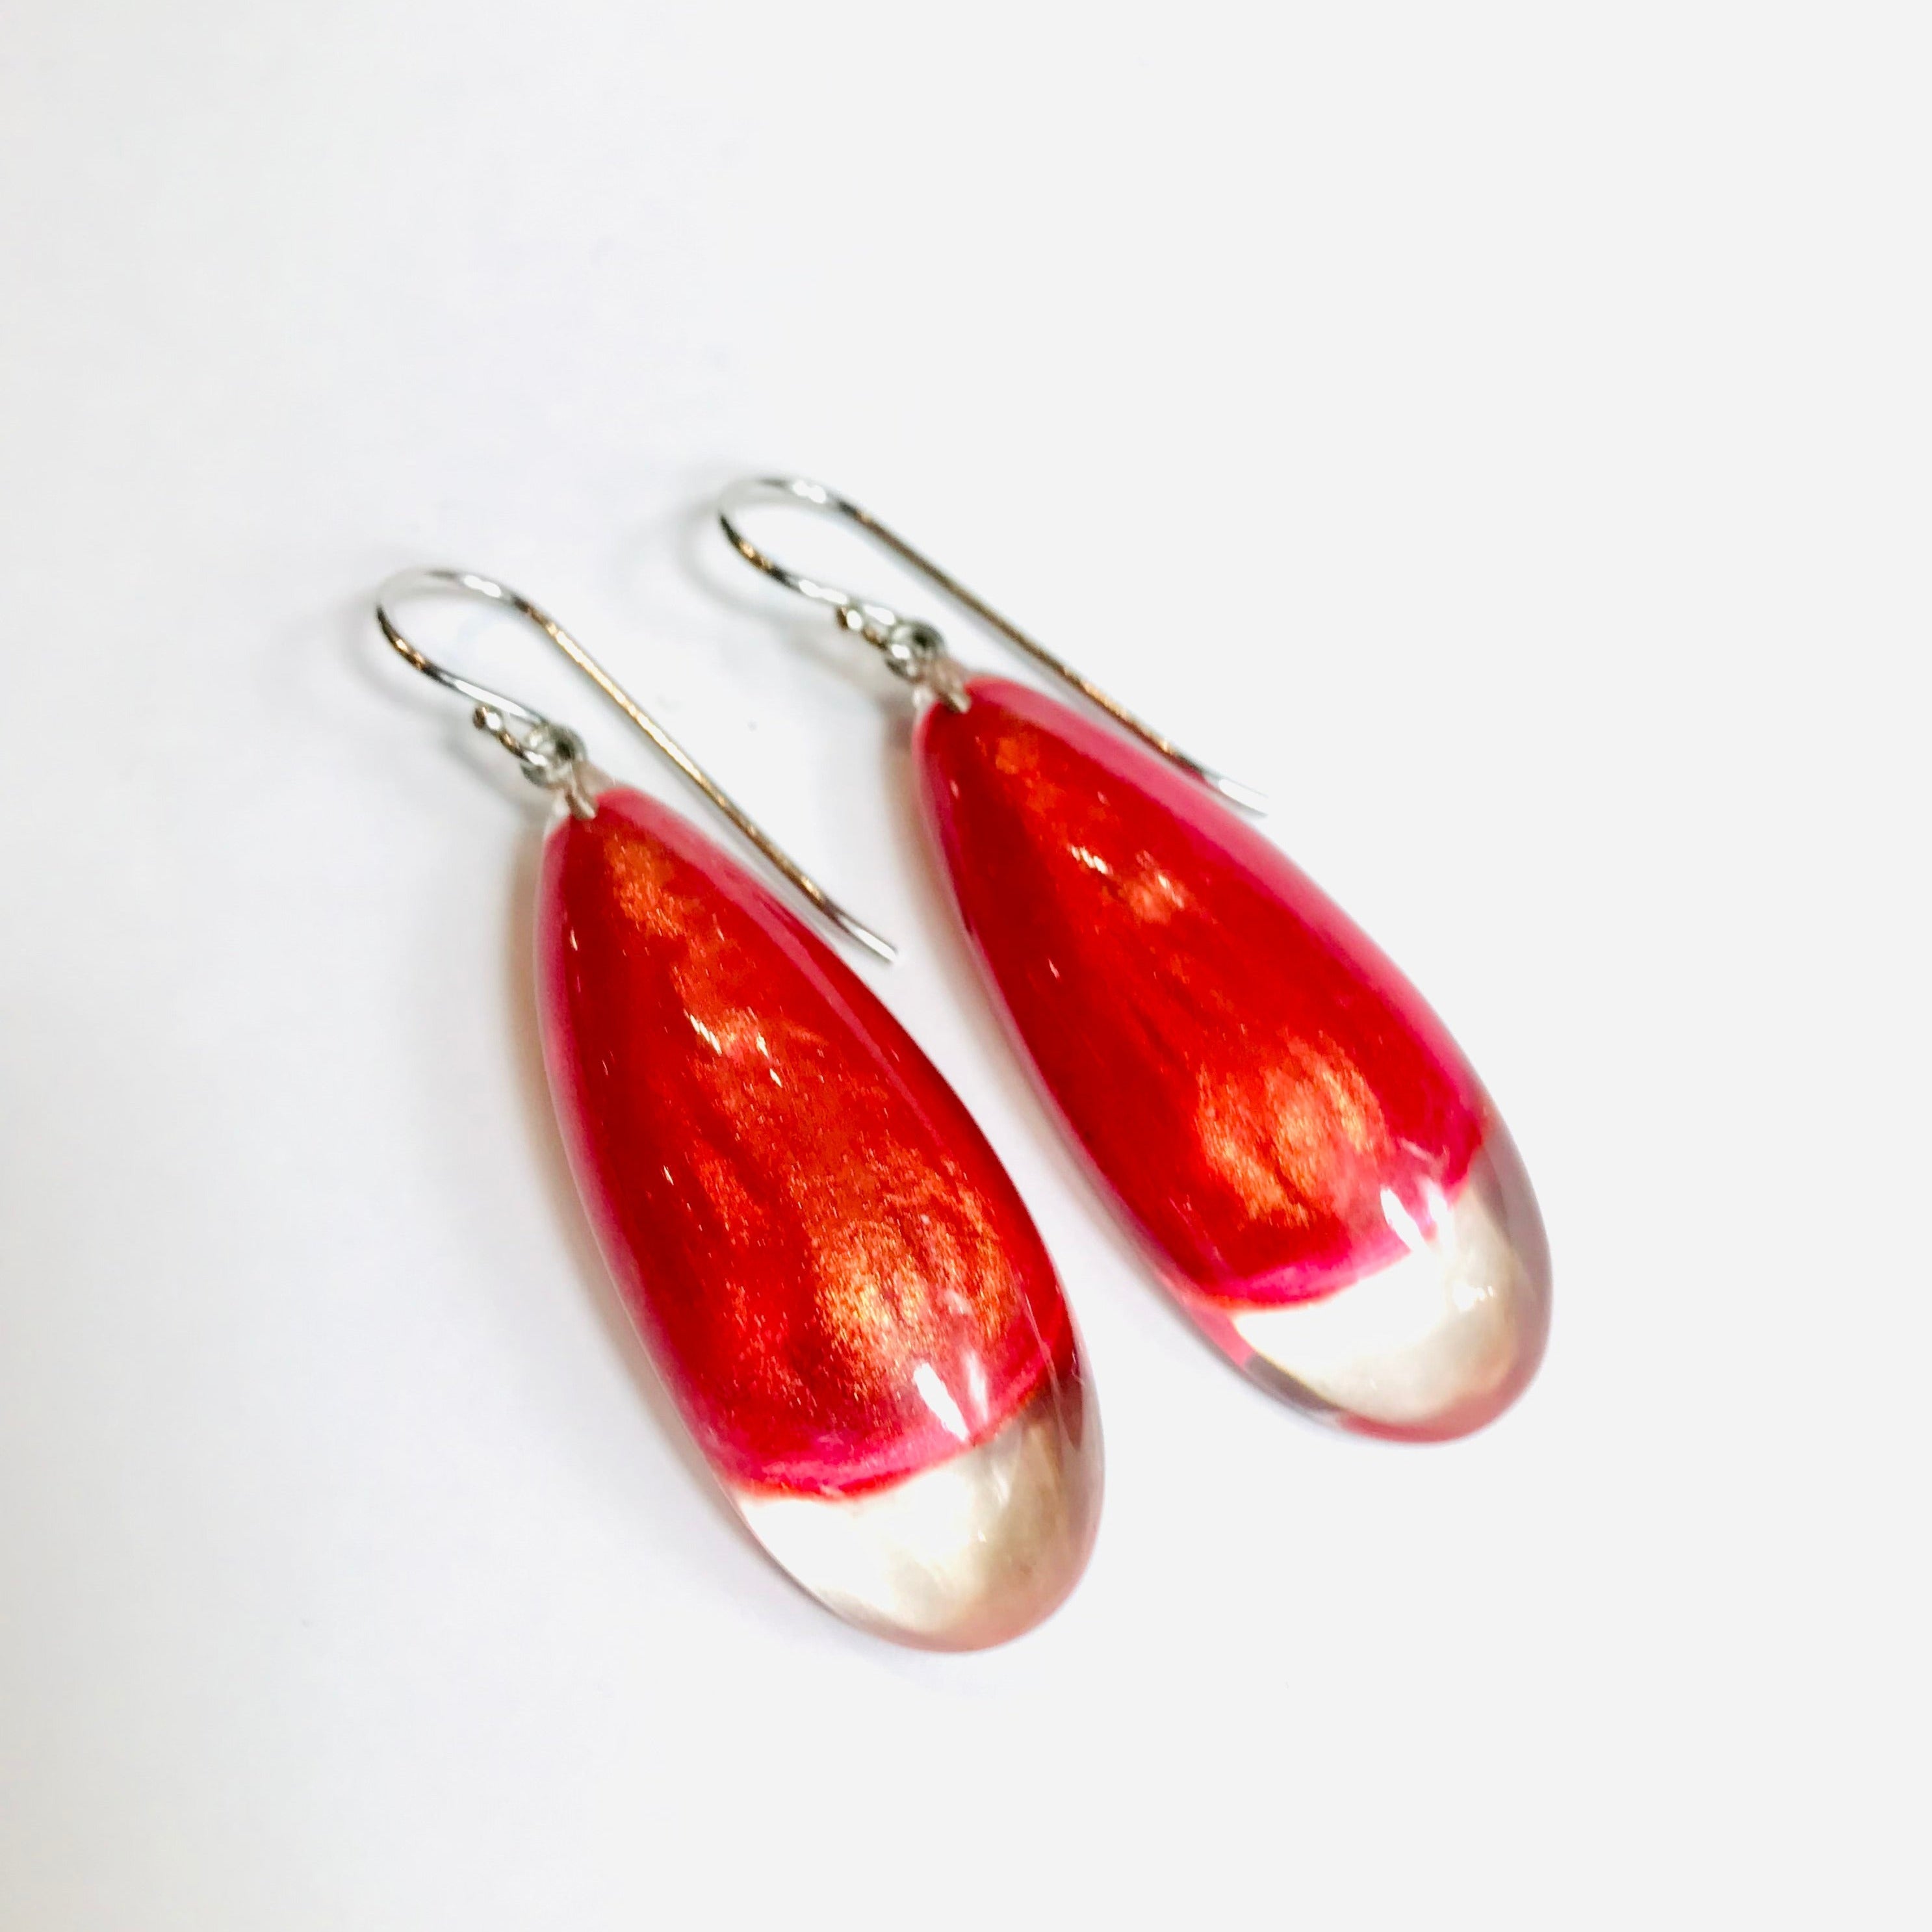 Red Luxus Earrings - The Nancy Smillie Shop - Art, Jewellery & Designer Gifts Glasgow